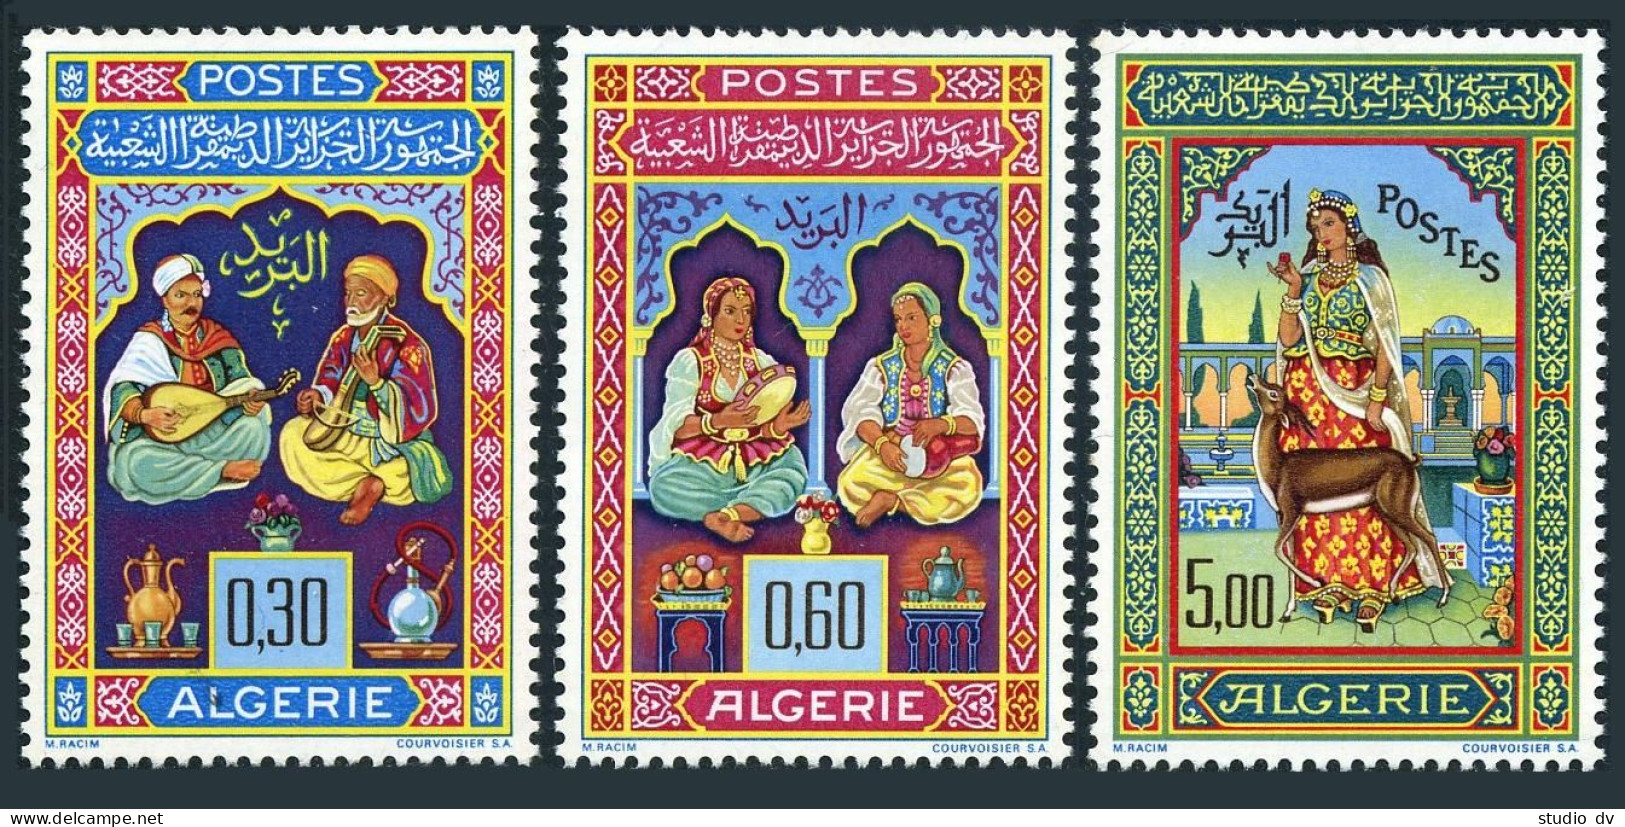 Algeria 341-343, MNH. Michel 441-443. Miniatures By Mohammed Racim, 1965 - Algerien (1962-...)